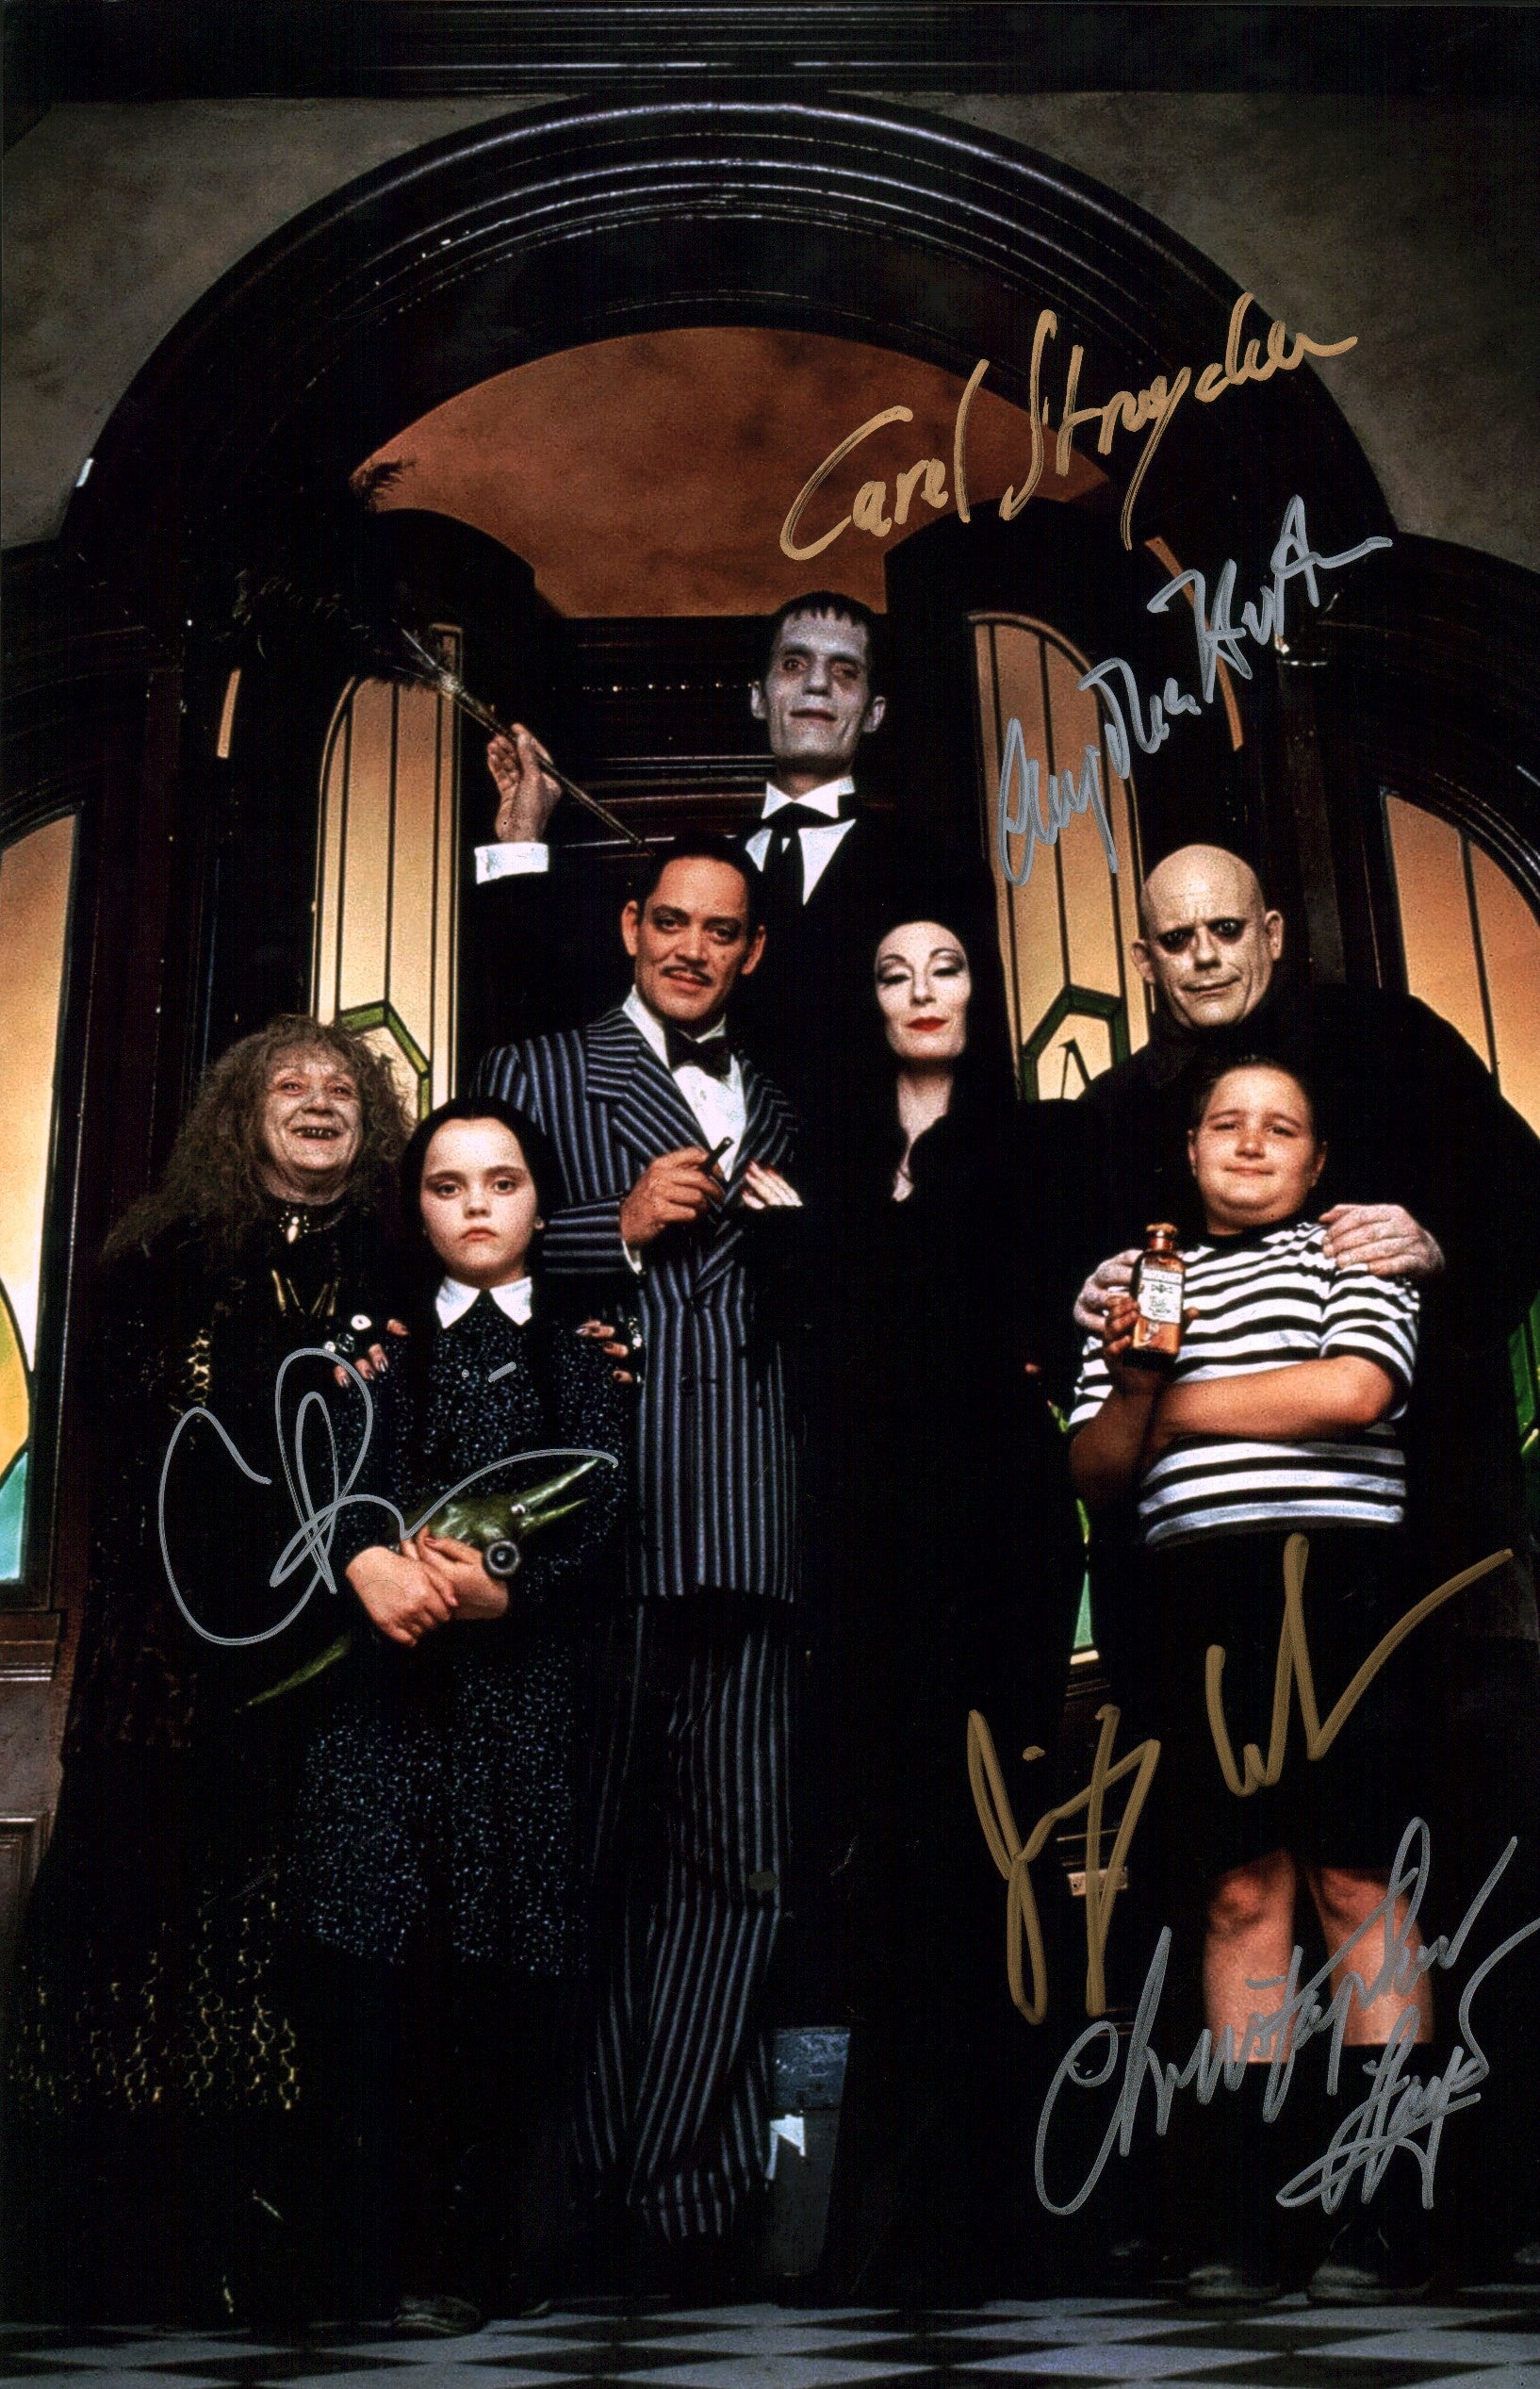 The Addams Family 11x17 Photo Poster Signed Ricci Lloyd Struycken Huston Workman Autograph JSA COA Certified Auto GalaxyCon